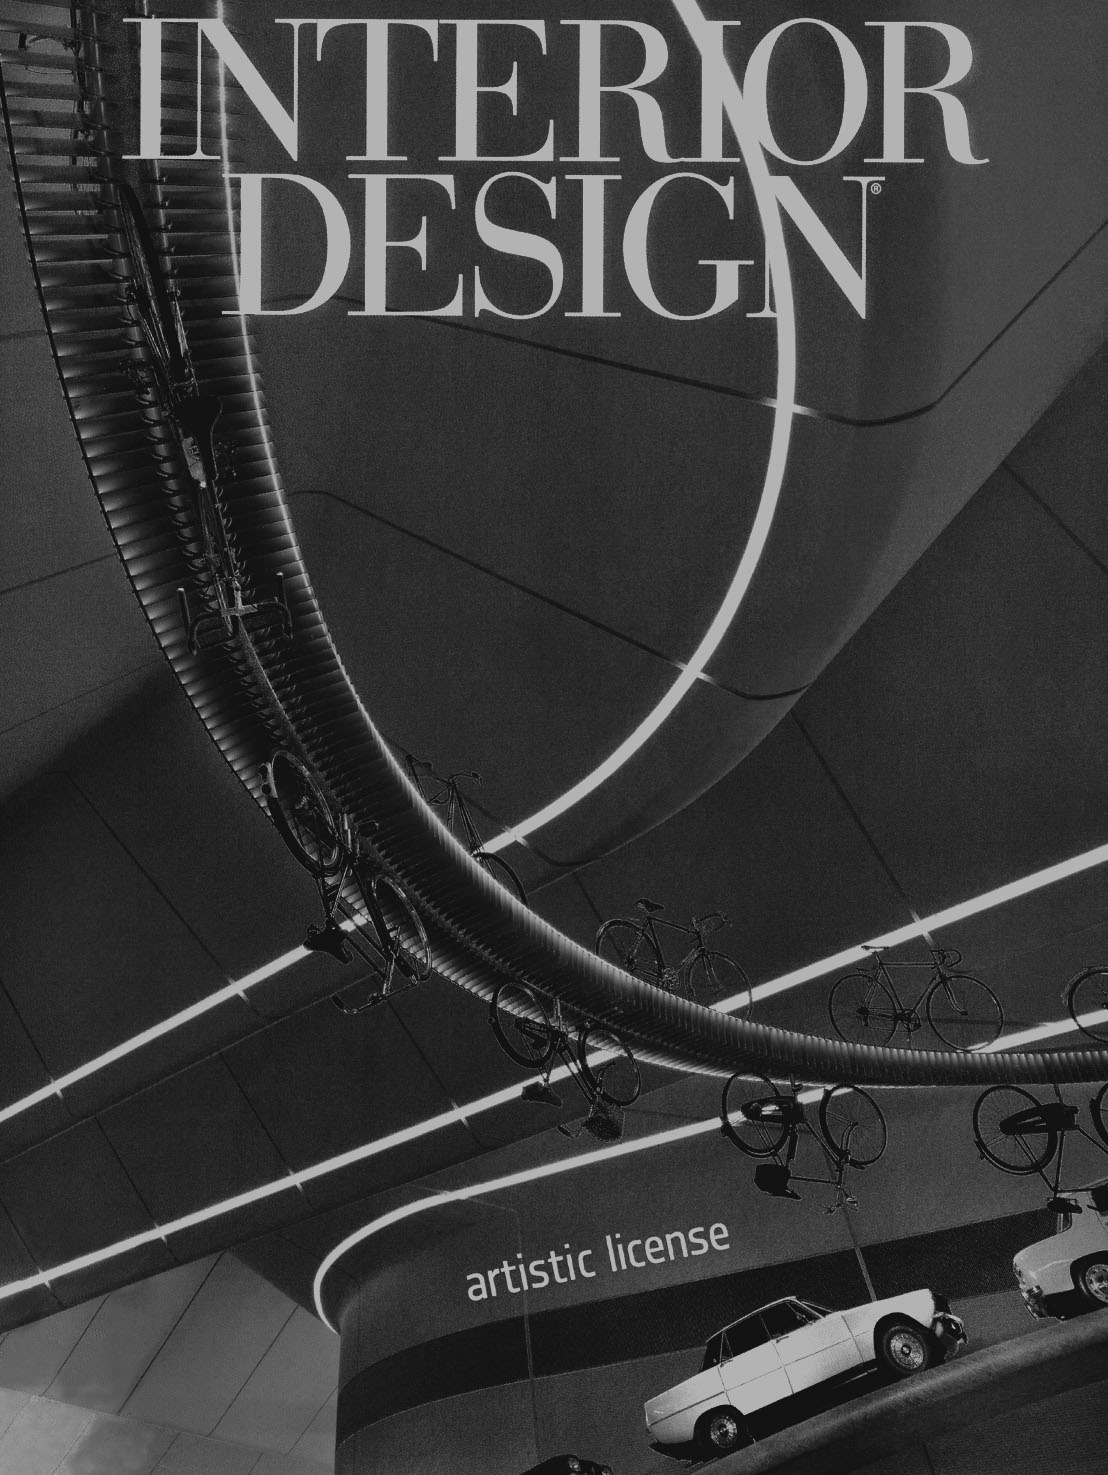 Established Hotel Design Firms NY,NY | Joe Ginsberg Design